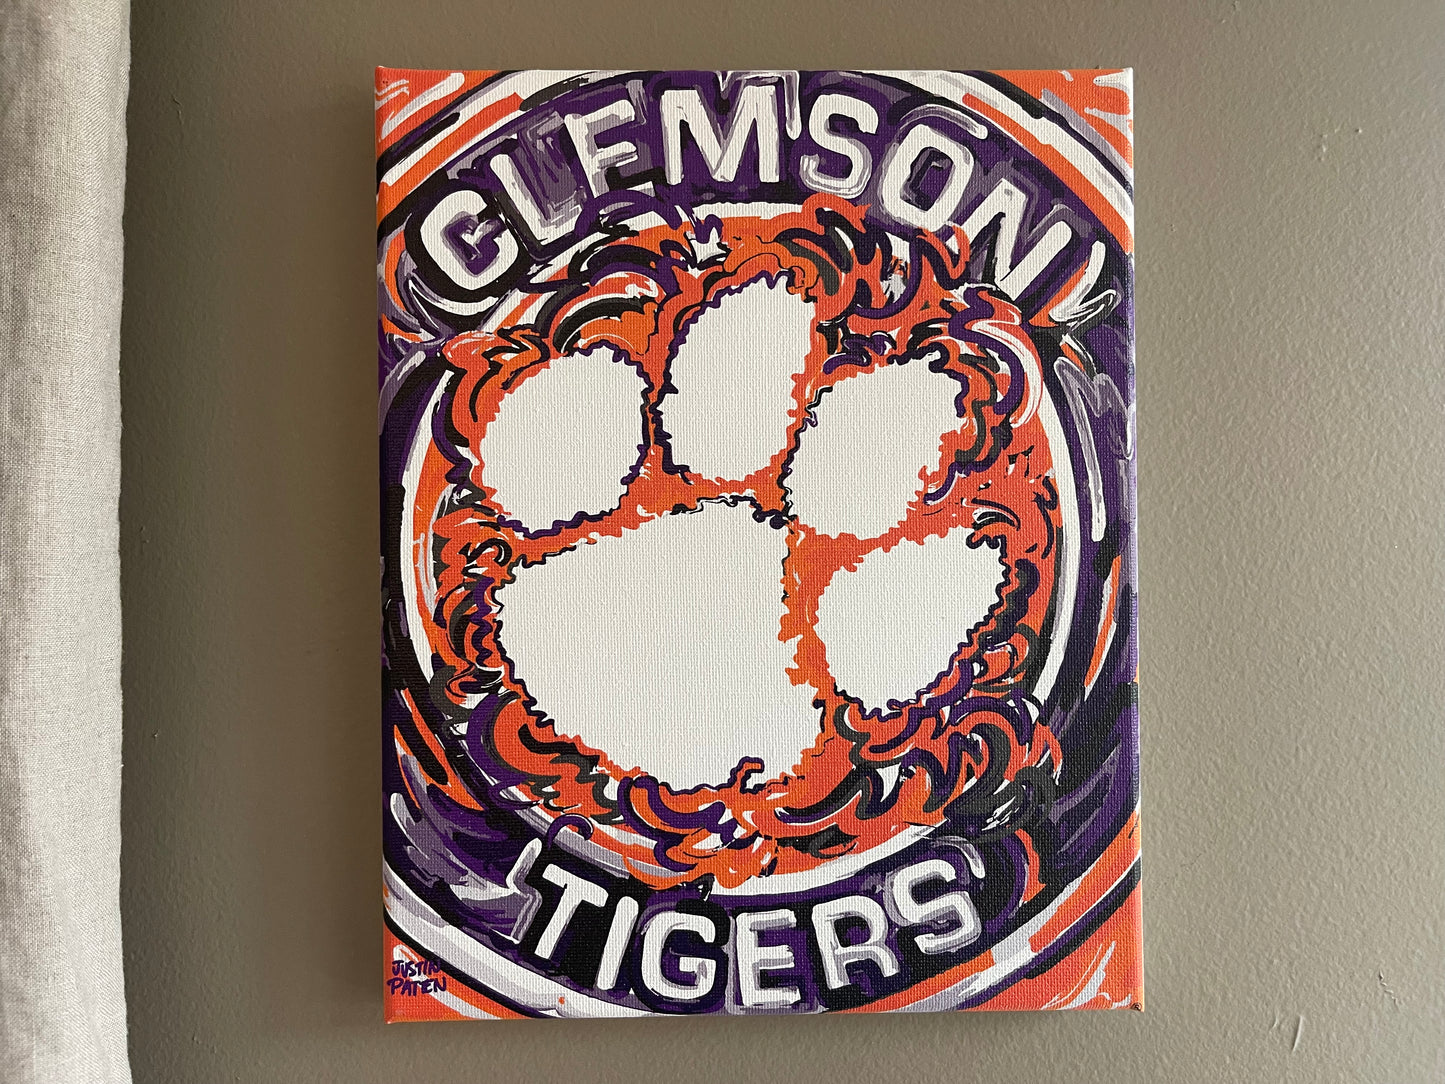 Clemson University 16" x 20" Paw Print Wrapped Canvas Print by Justin Patten